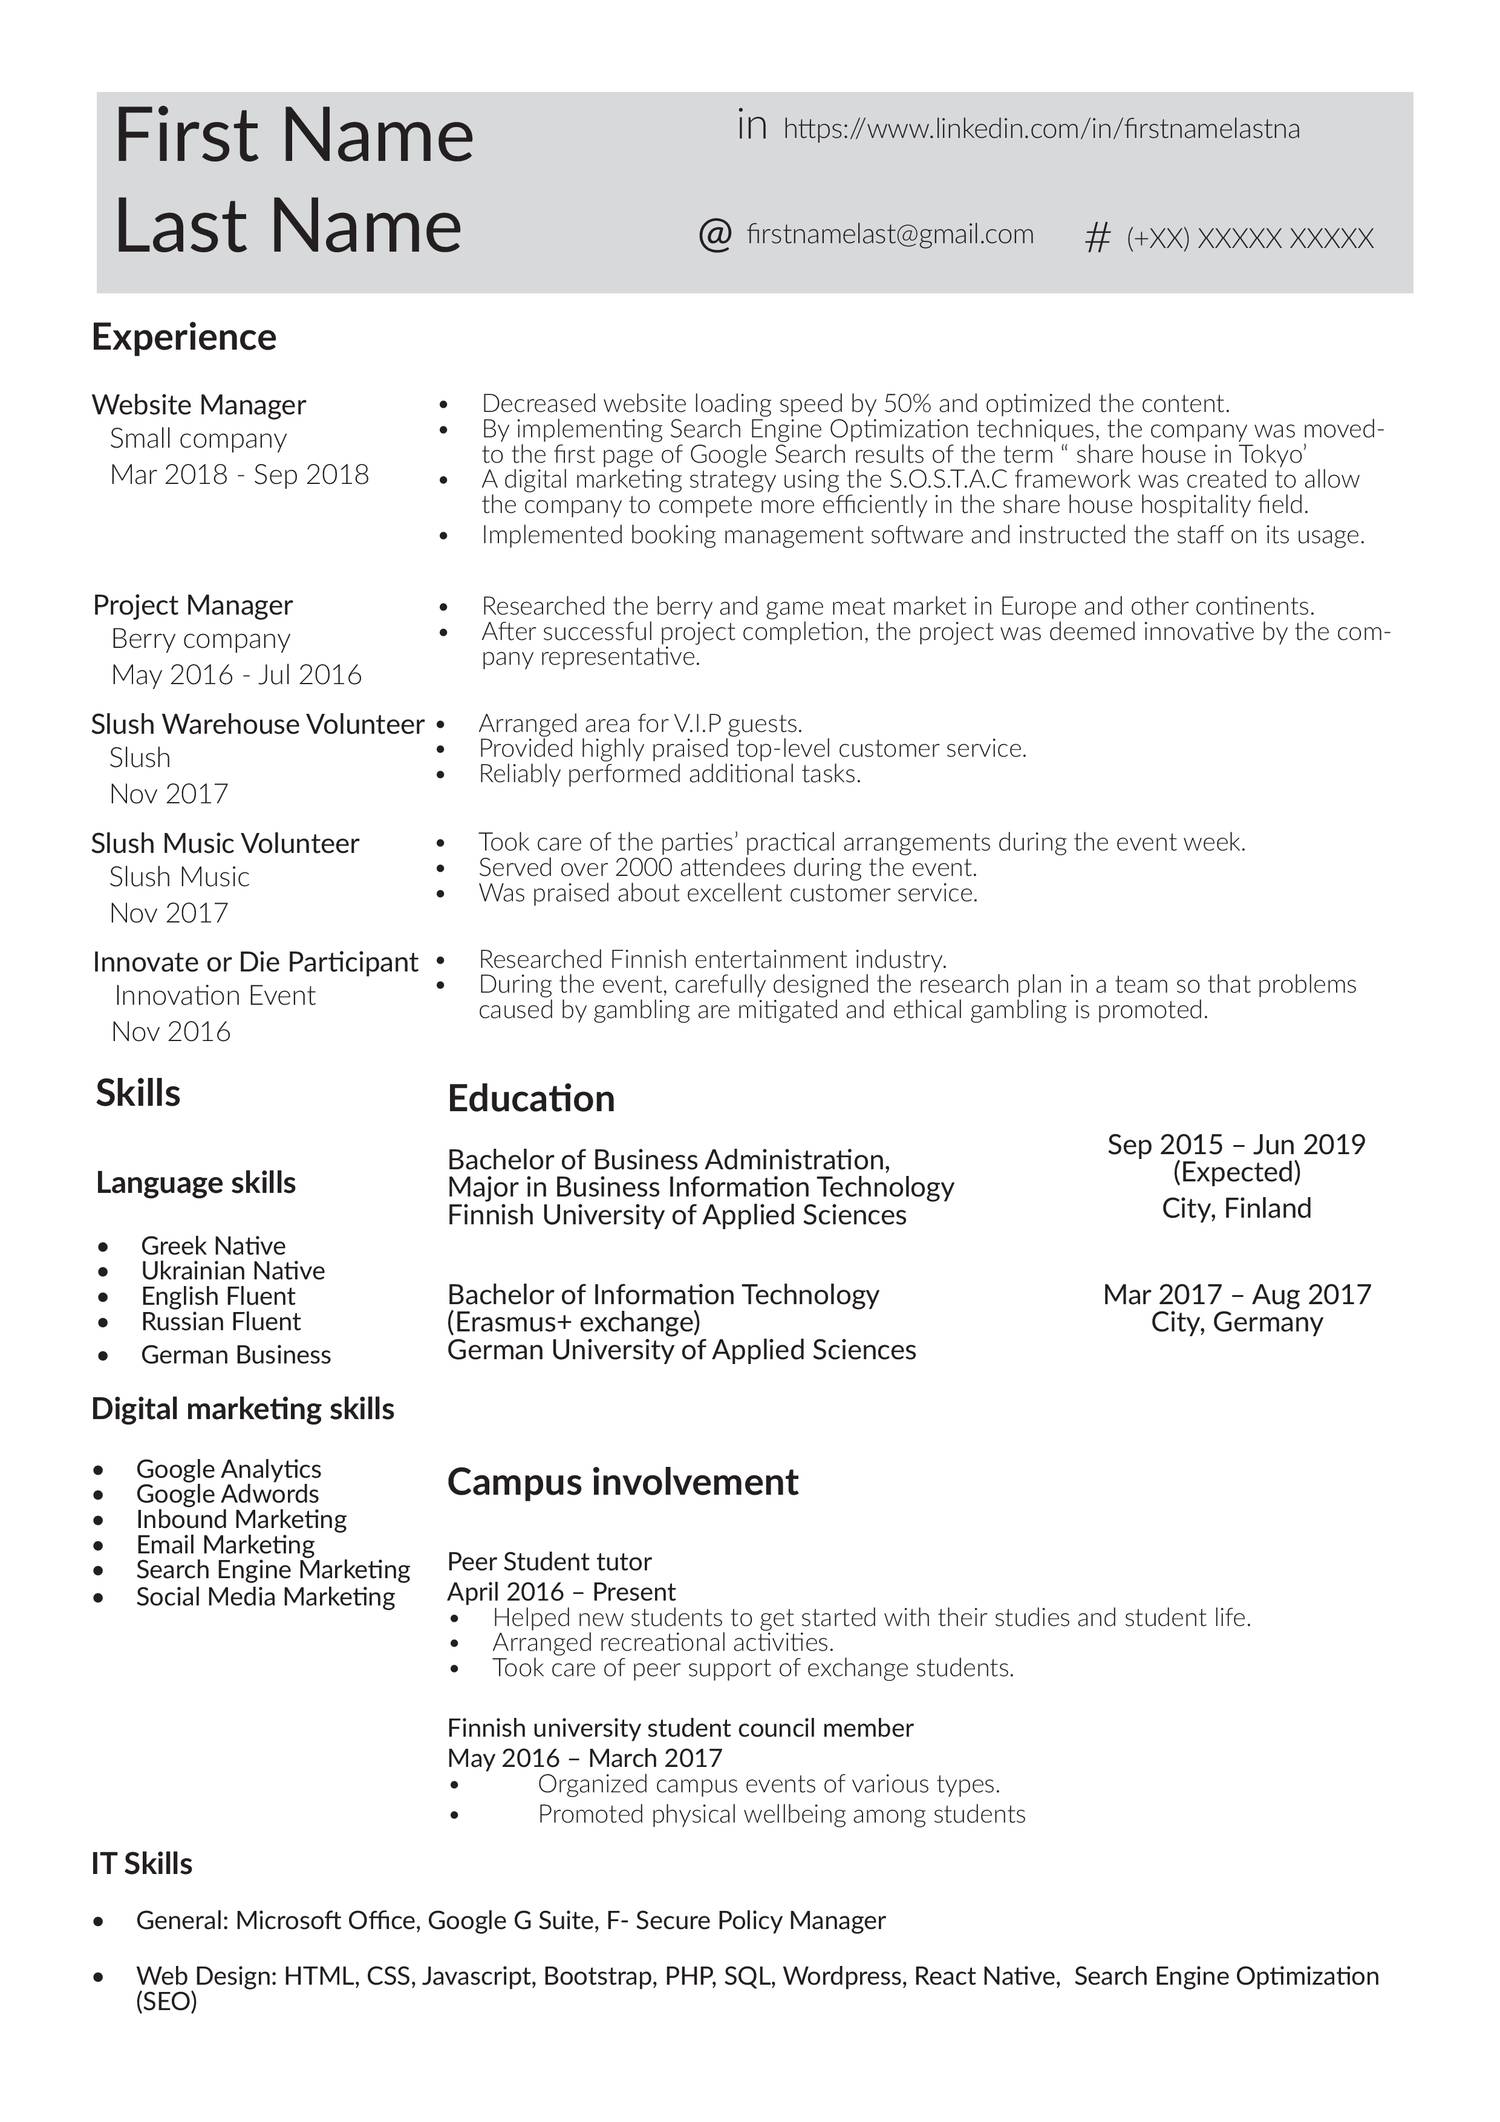 sample resume skills for fresh graduate